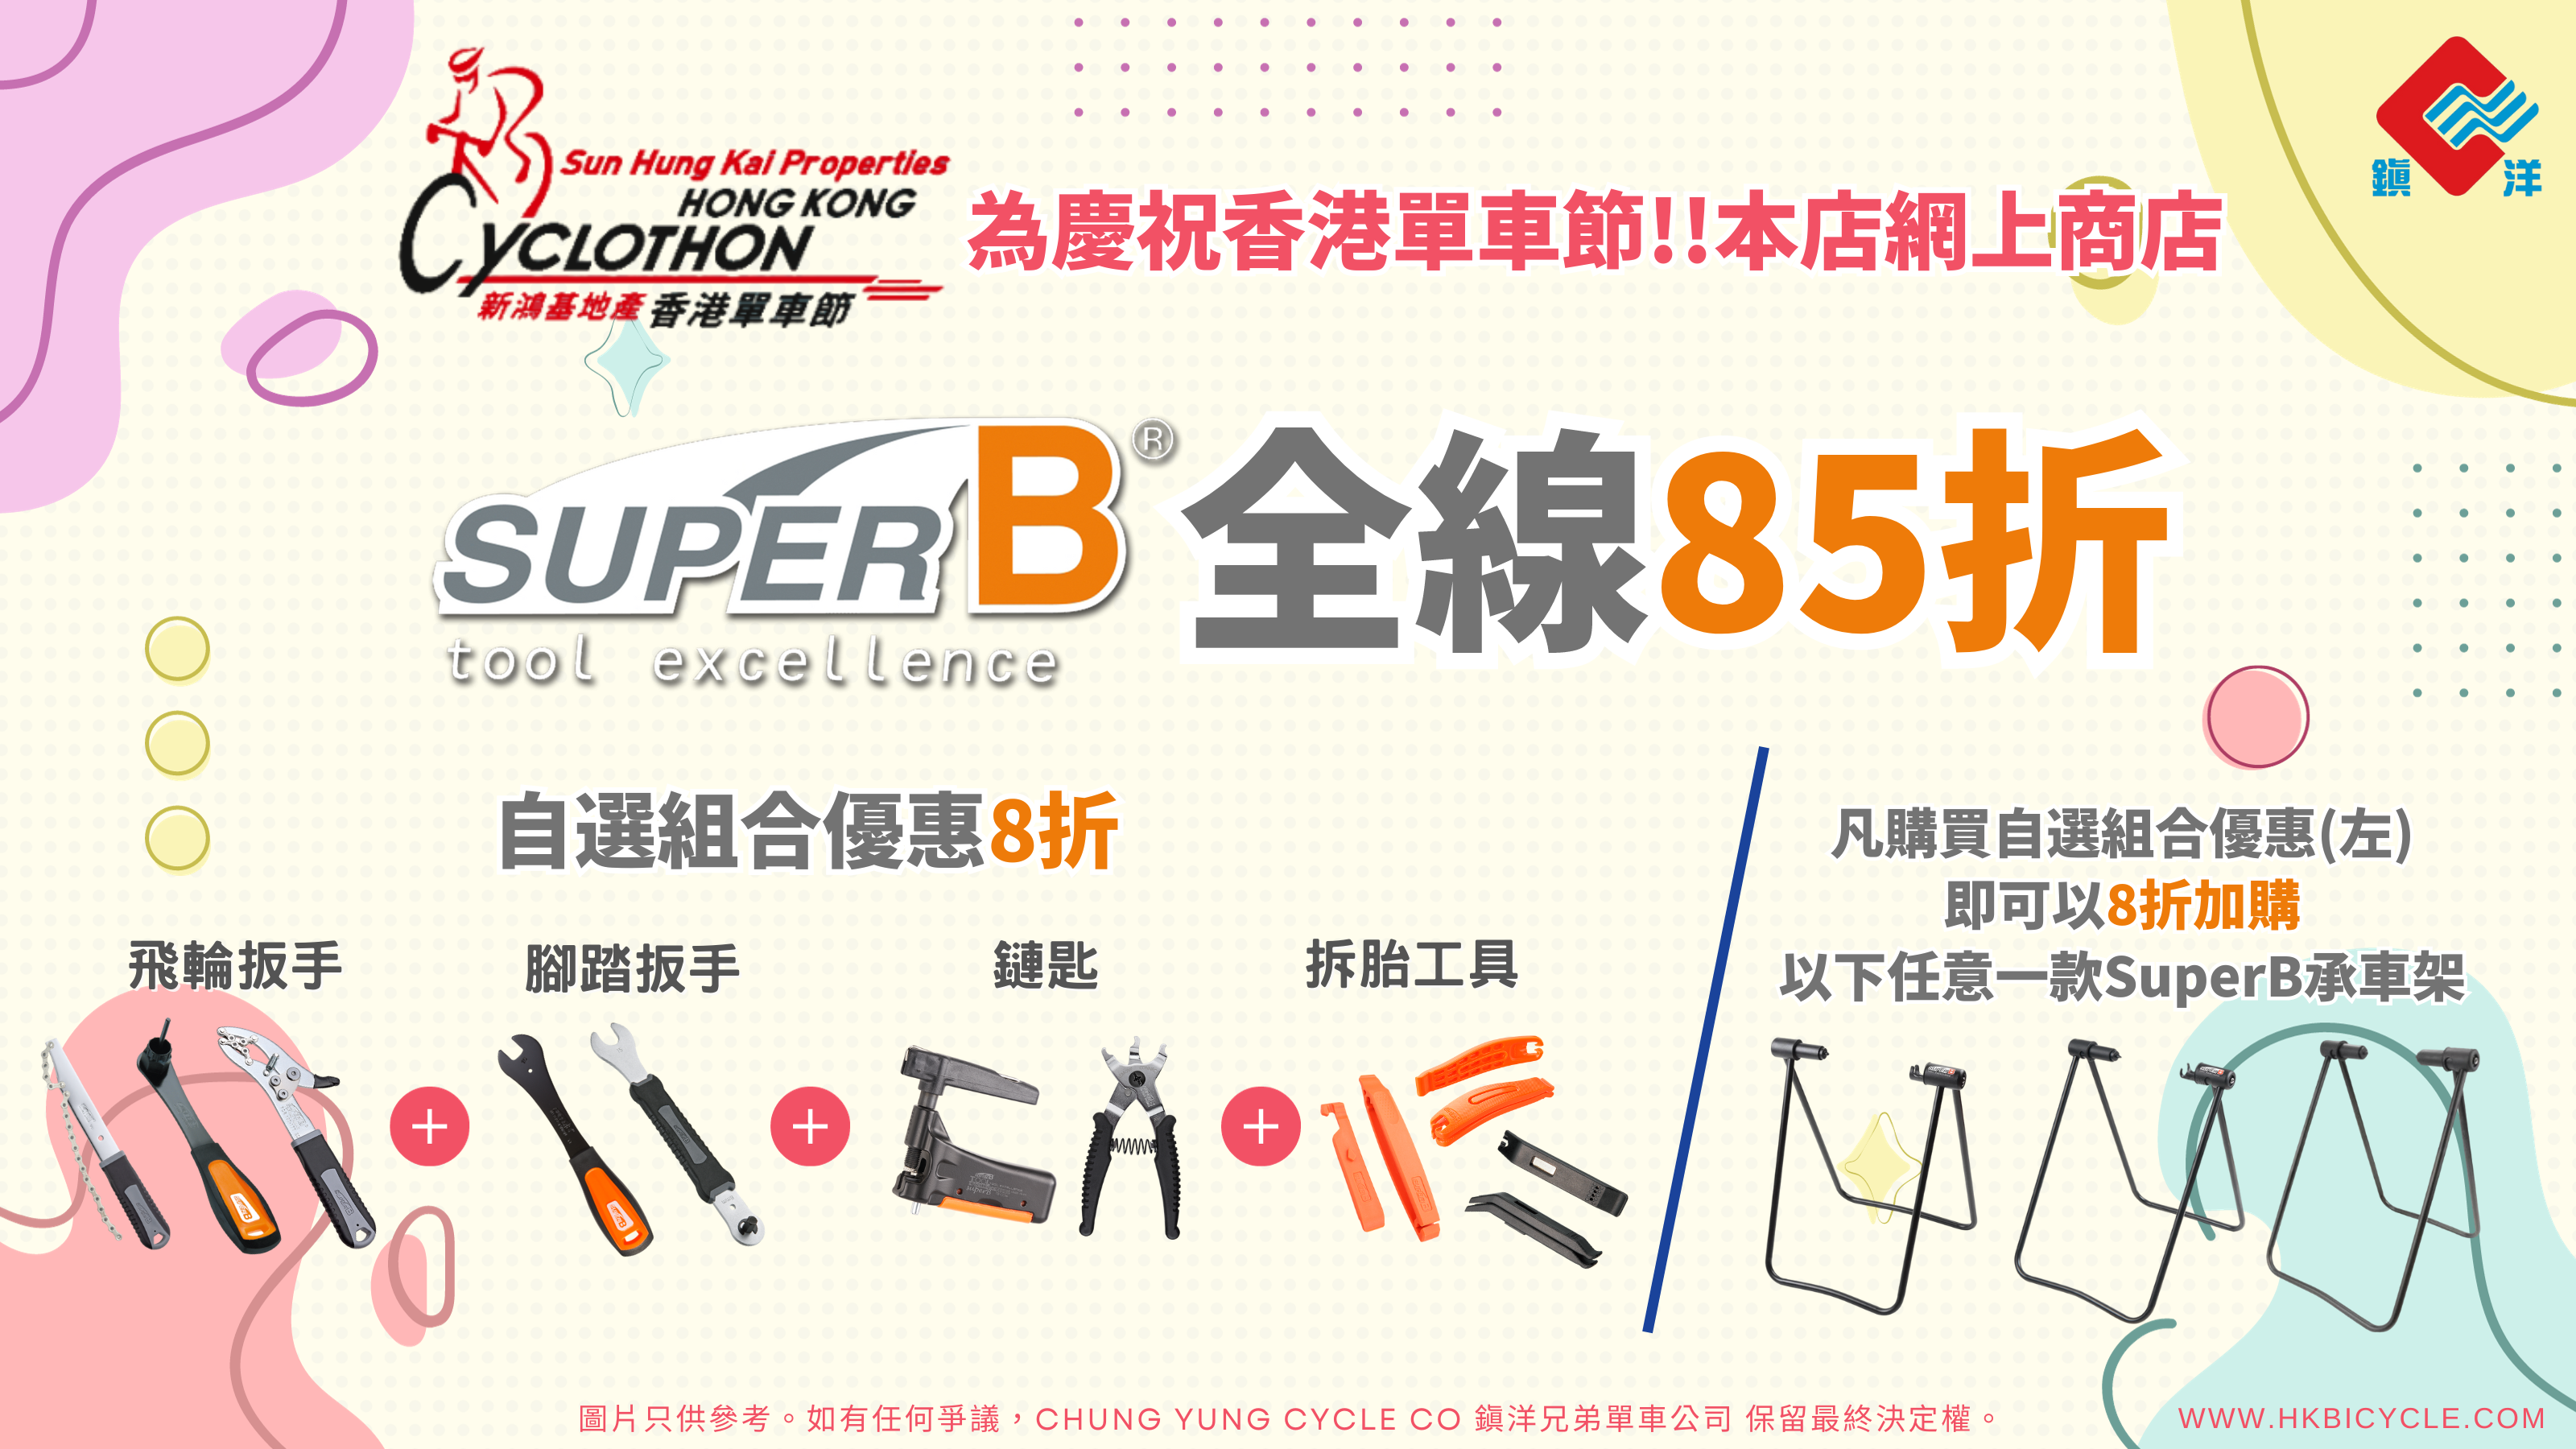 【SUPER B 全線產品85 折優惠 + 指定工具組合更享8折優惠】